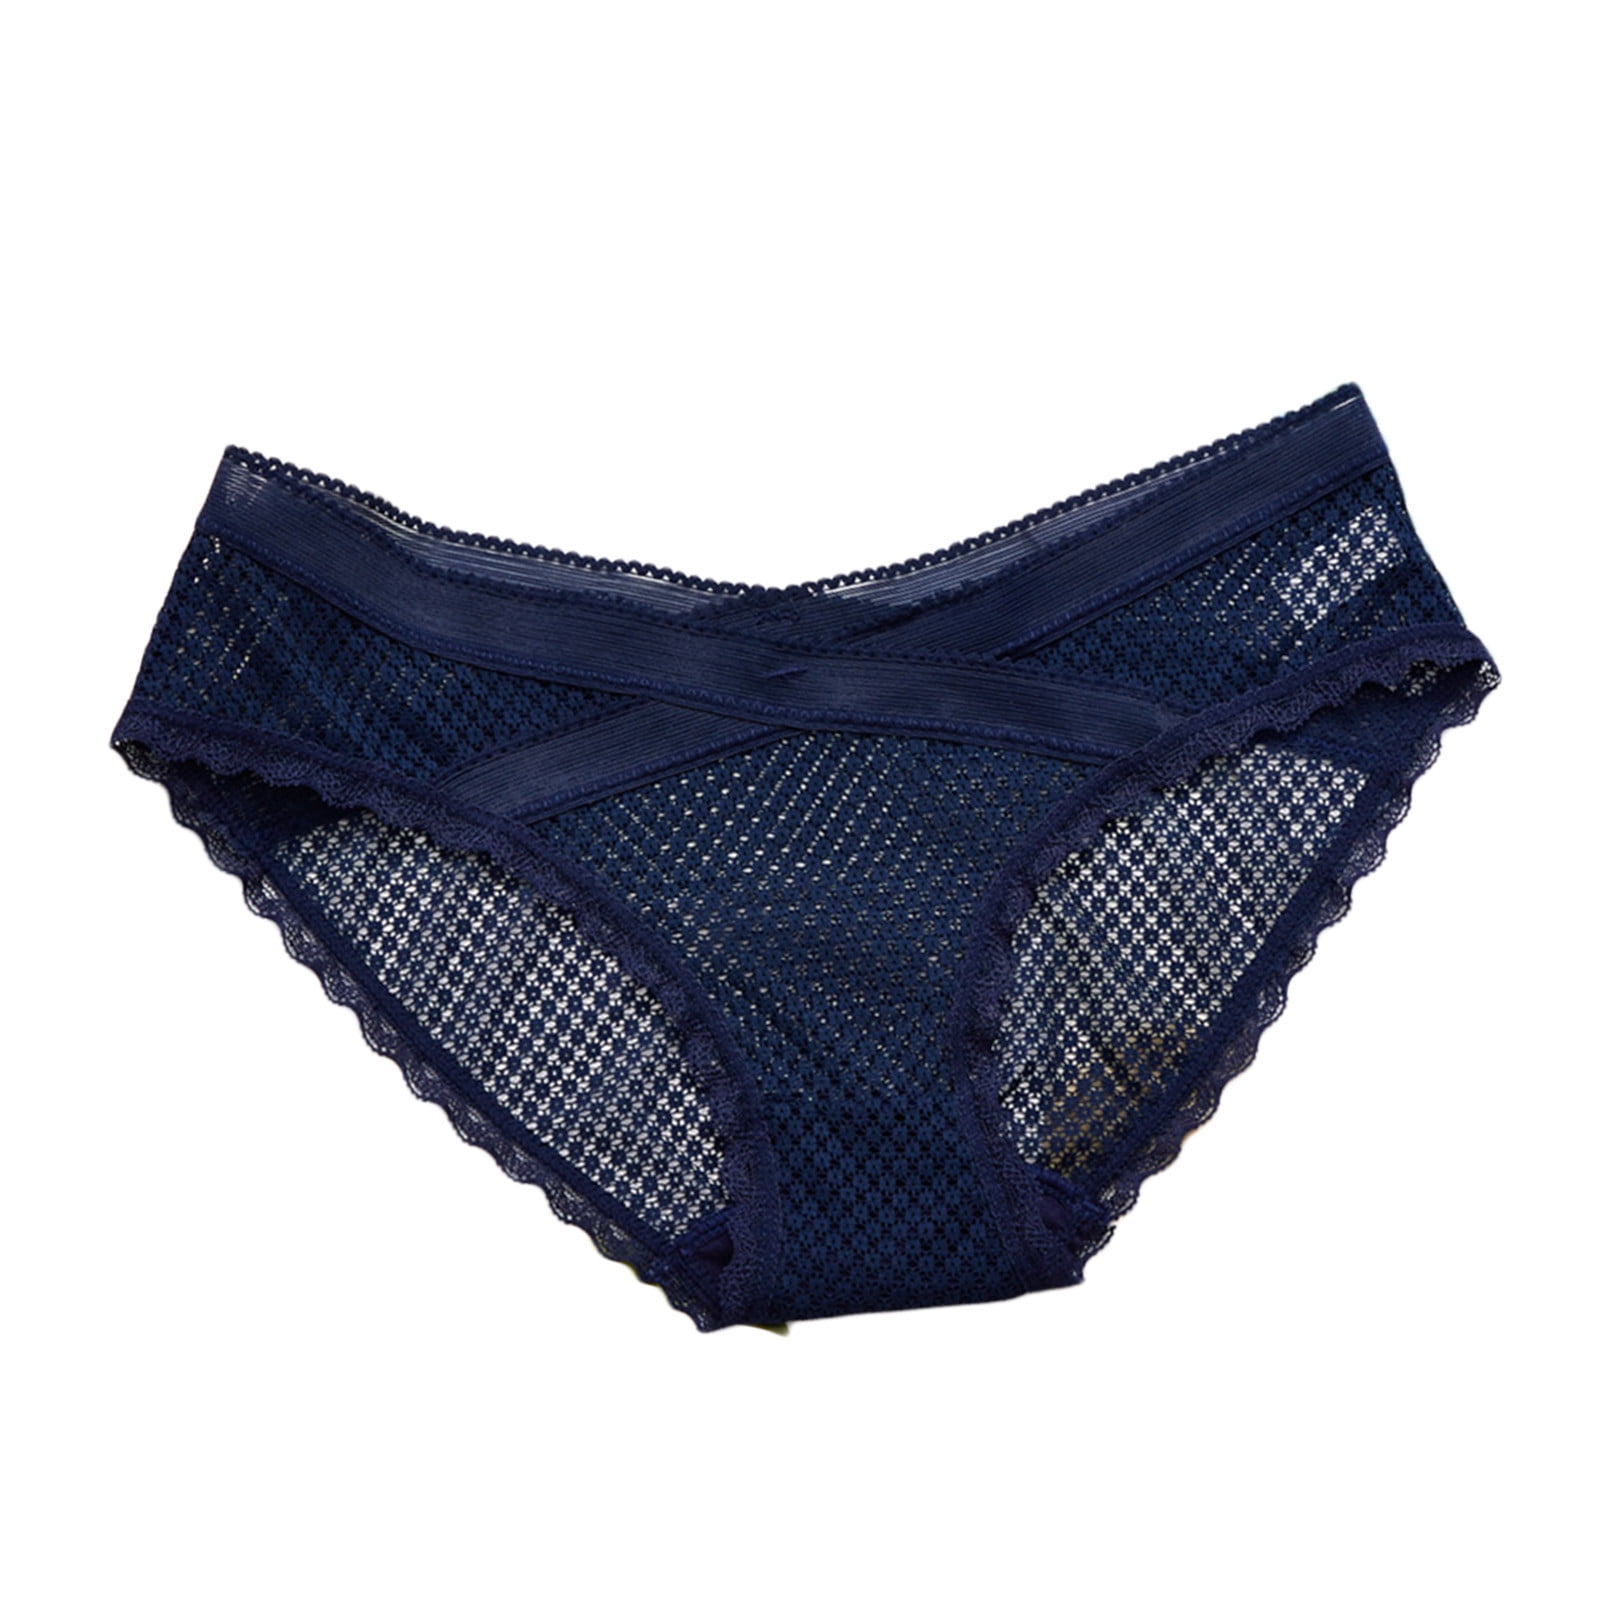 Efsteb Women's Thongs G Thong Lingerie Transparent Breathable